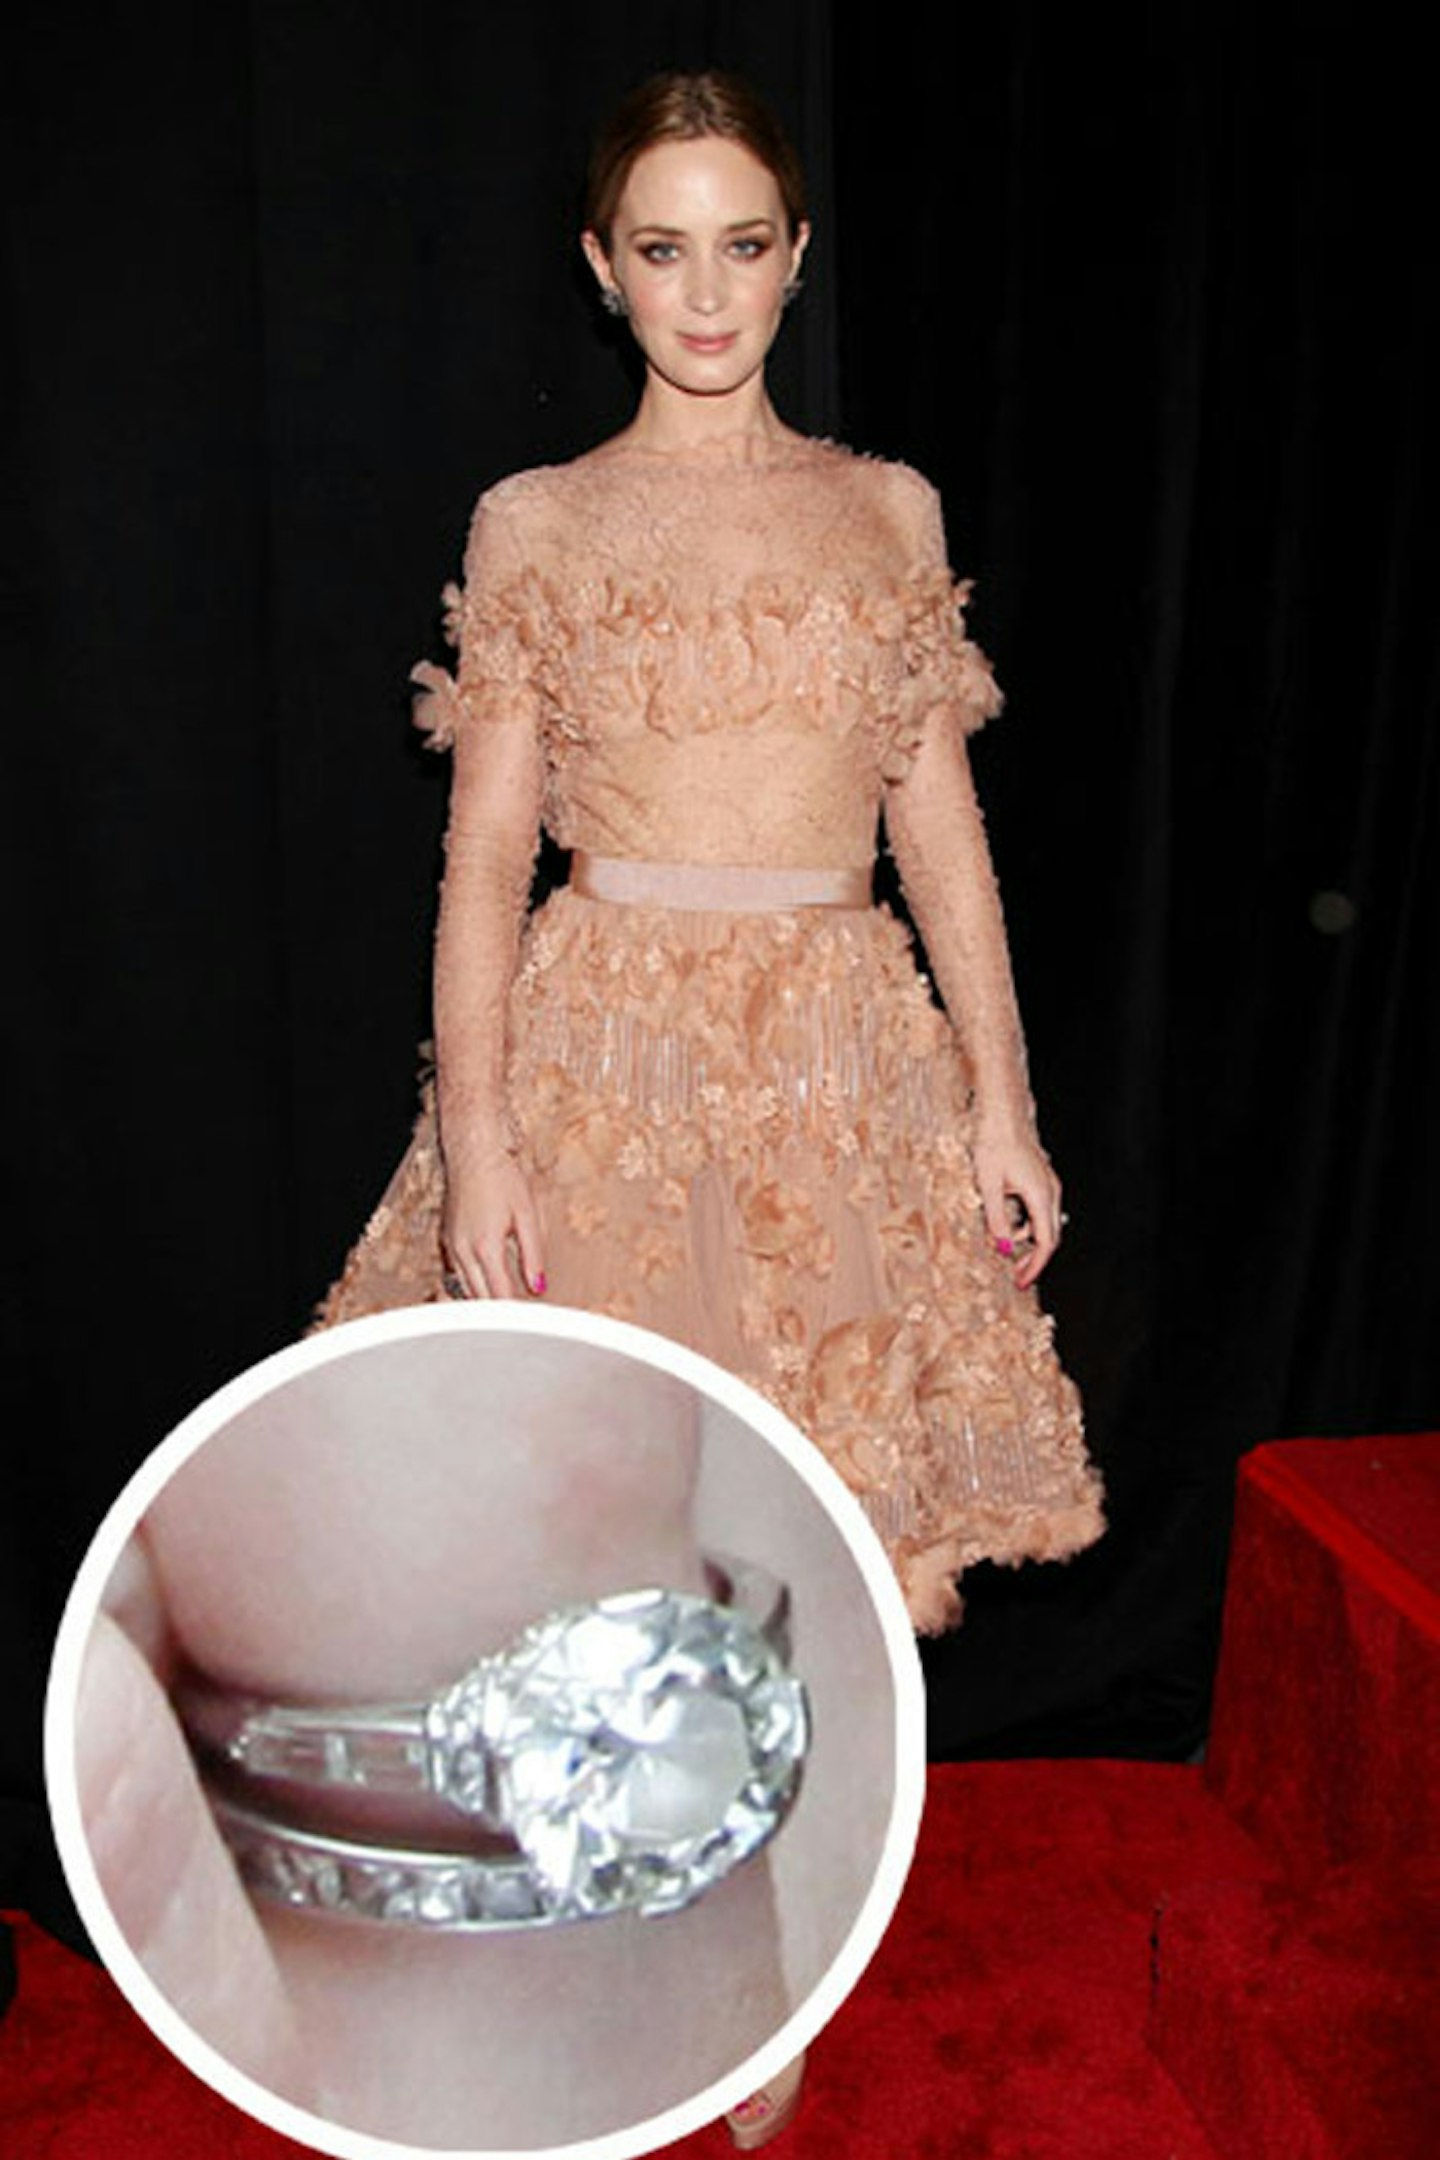 John Krasinski gave Emily Blunt a 3 carat Neil Lane ring, worth an estimated $100,000.